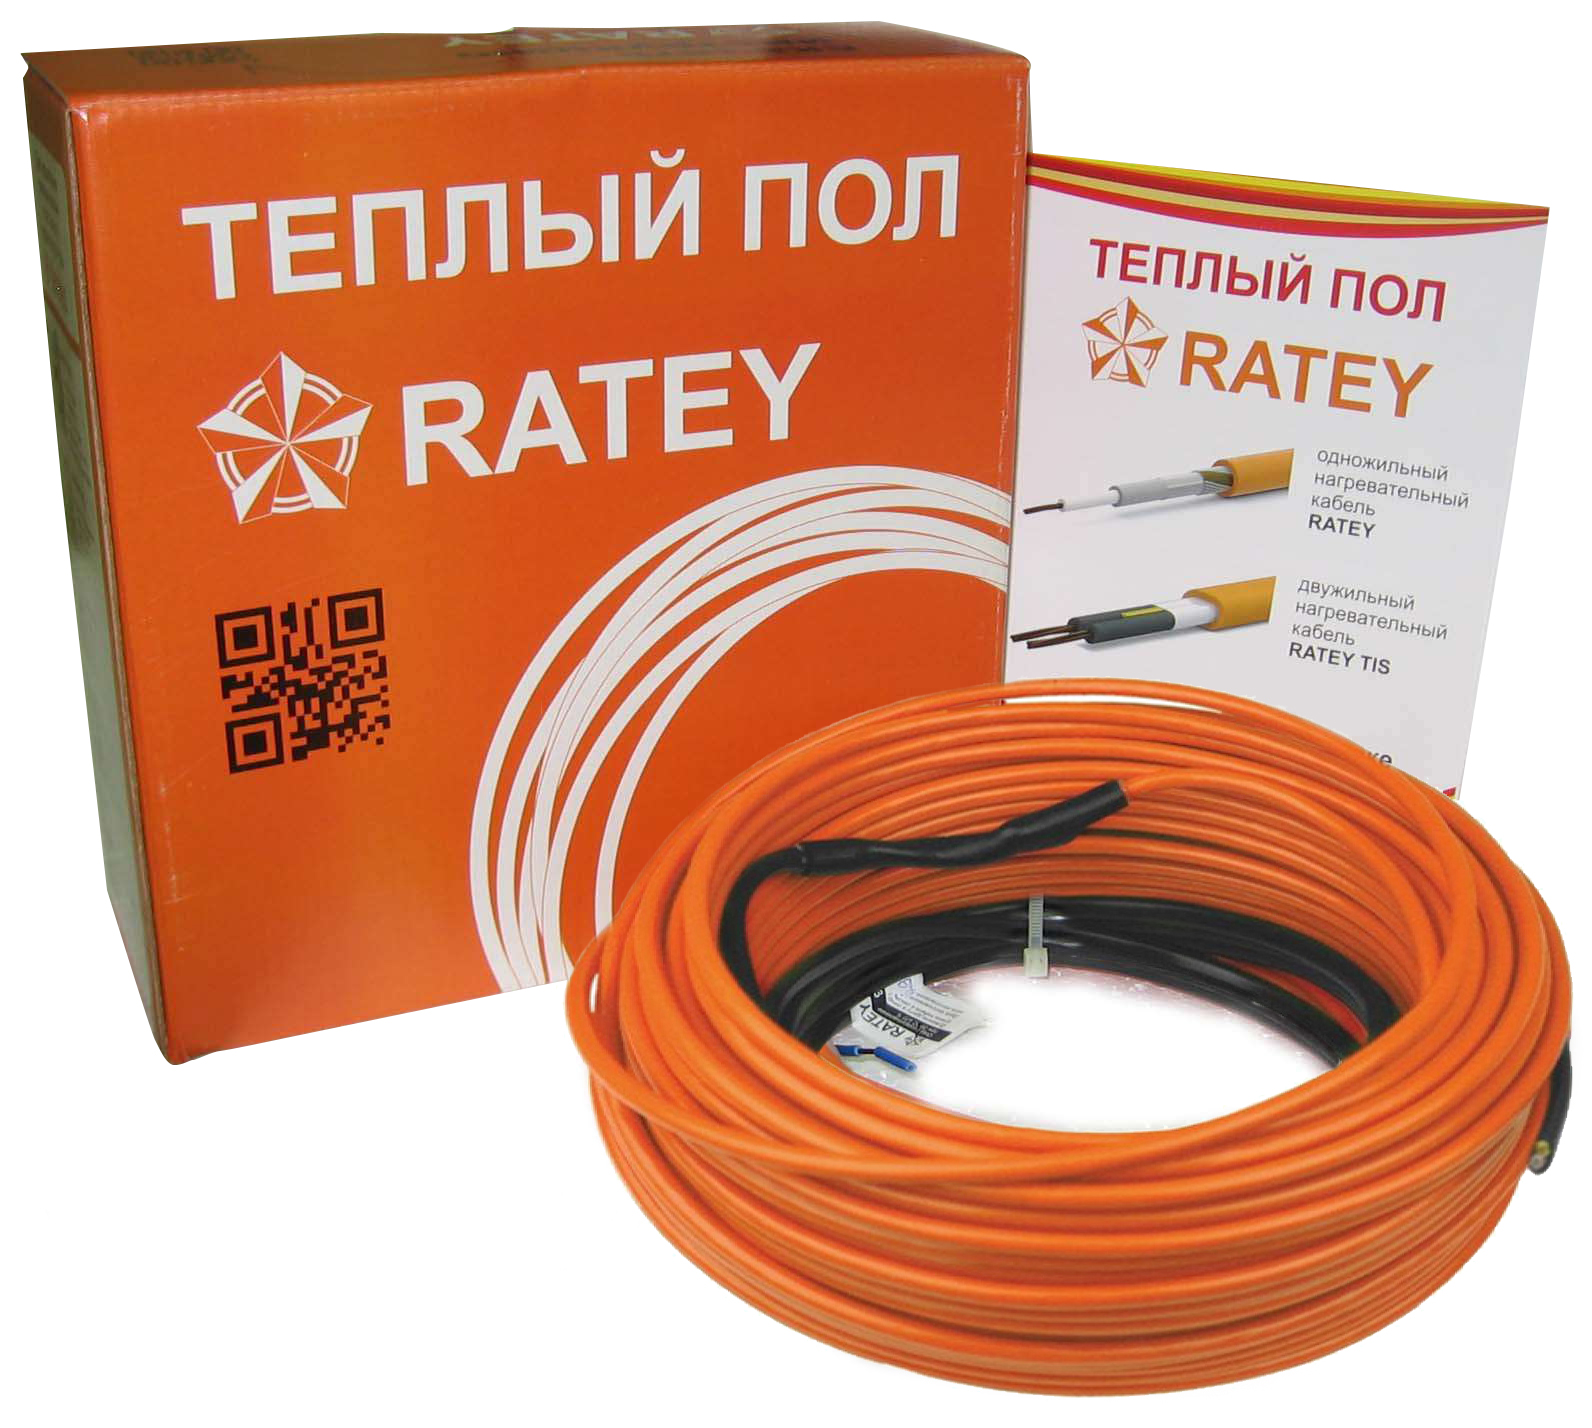 Электрический теплый пол Ratey RD1 0.485